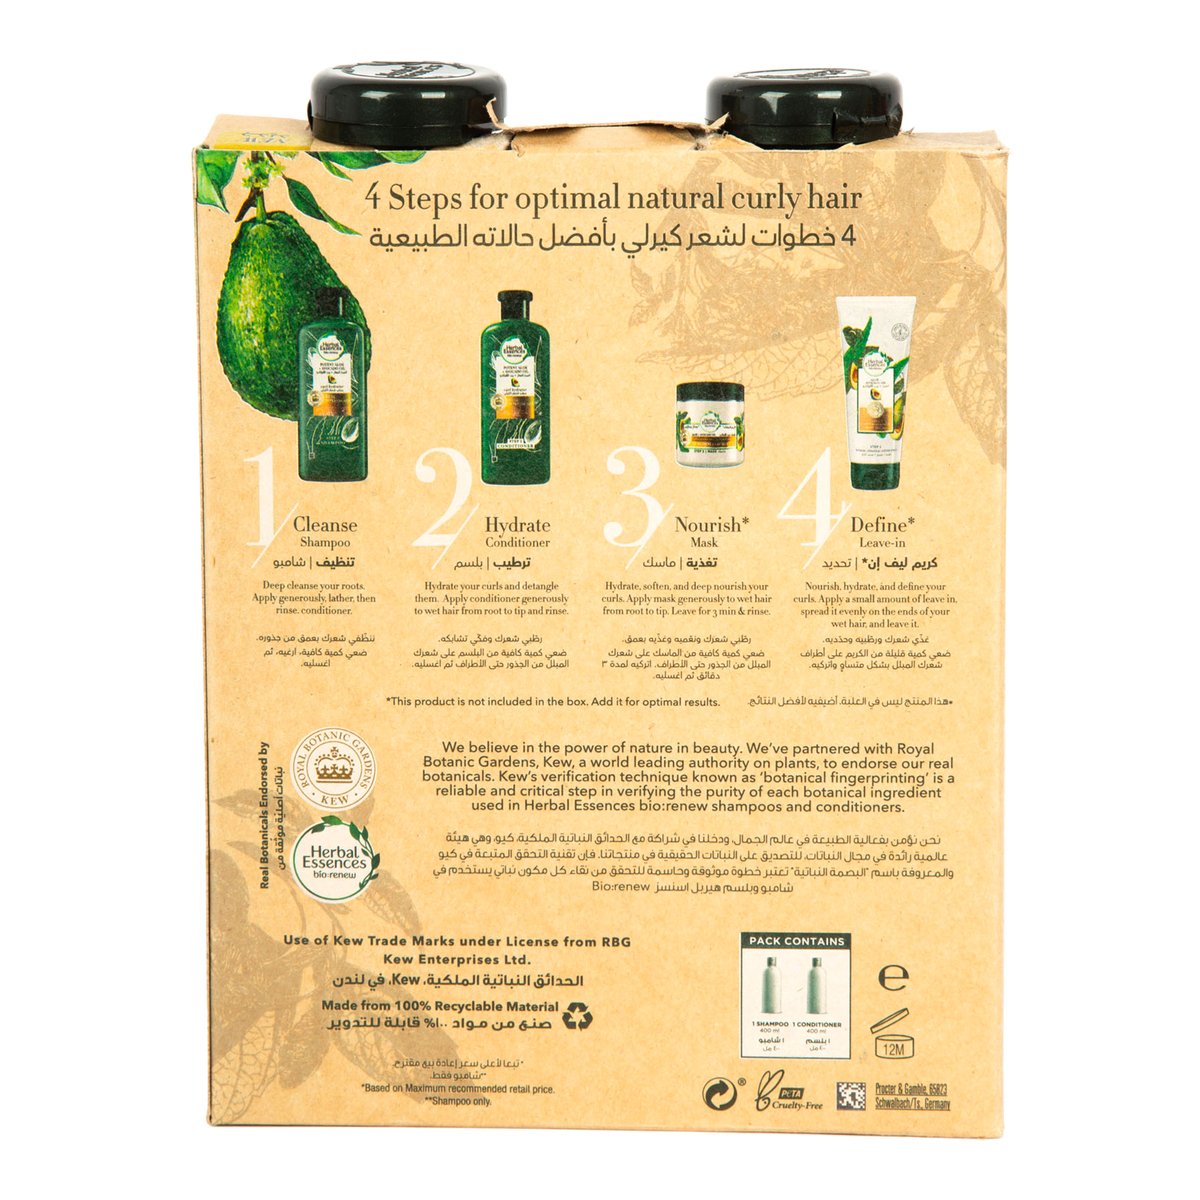 Herbal Essences Potent Aloe + Avocado Oil Shampoo 400 ml + Conditioner 400 ml